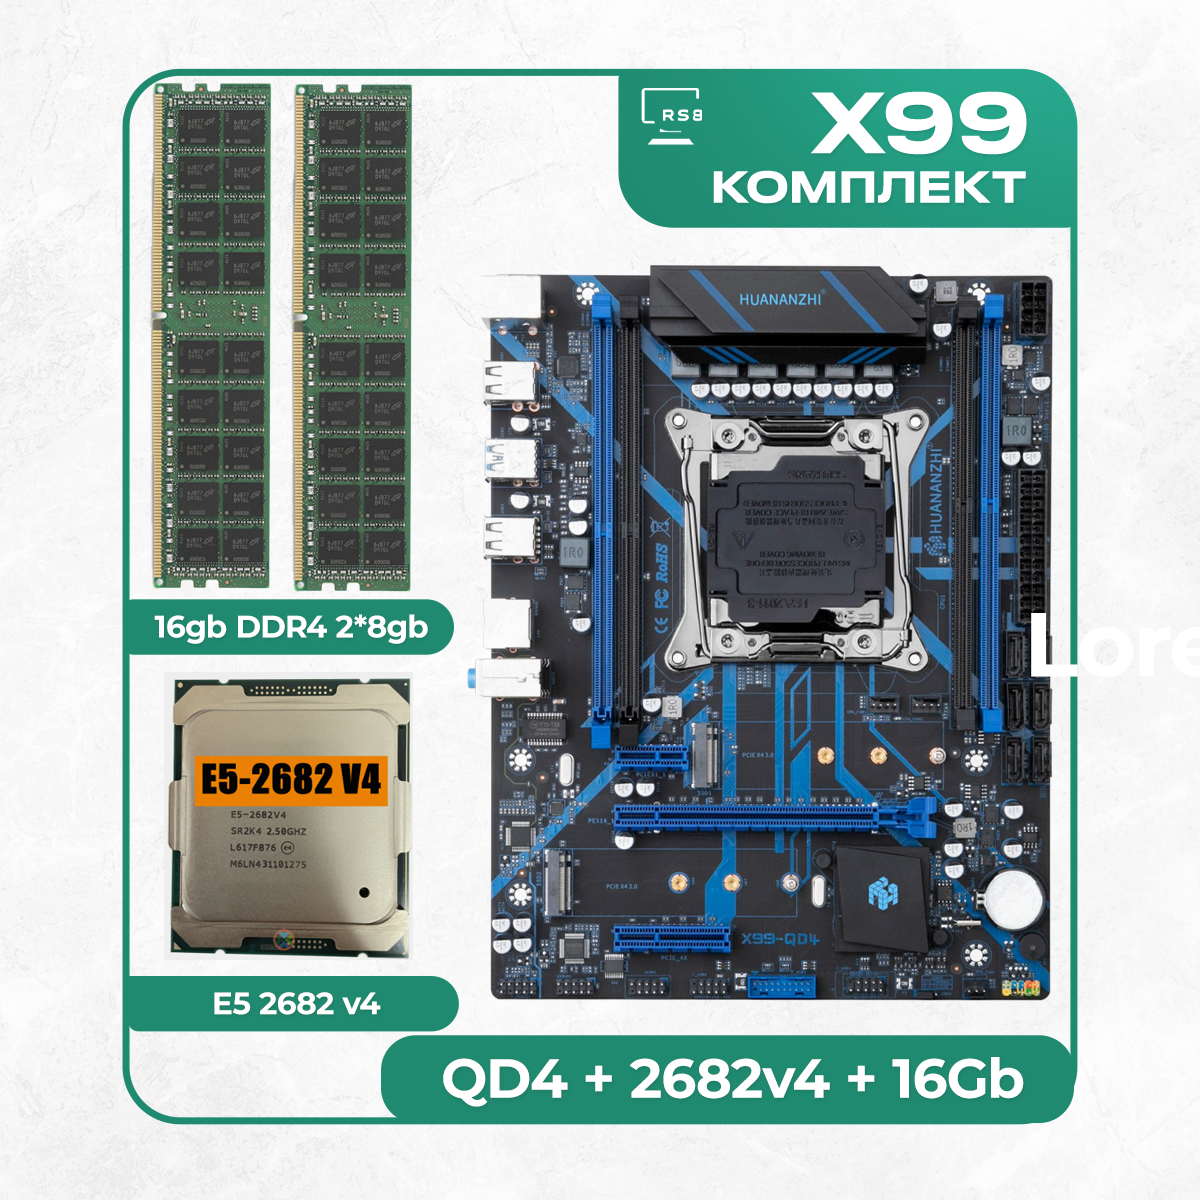 Комплект материнской платы X99: Huananzhi QD4 2011v3 + Xeon E5 2667v4 + DDR4